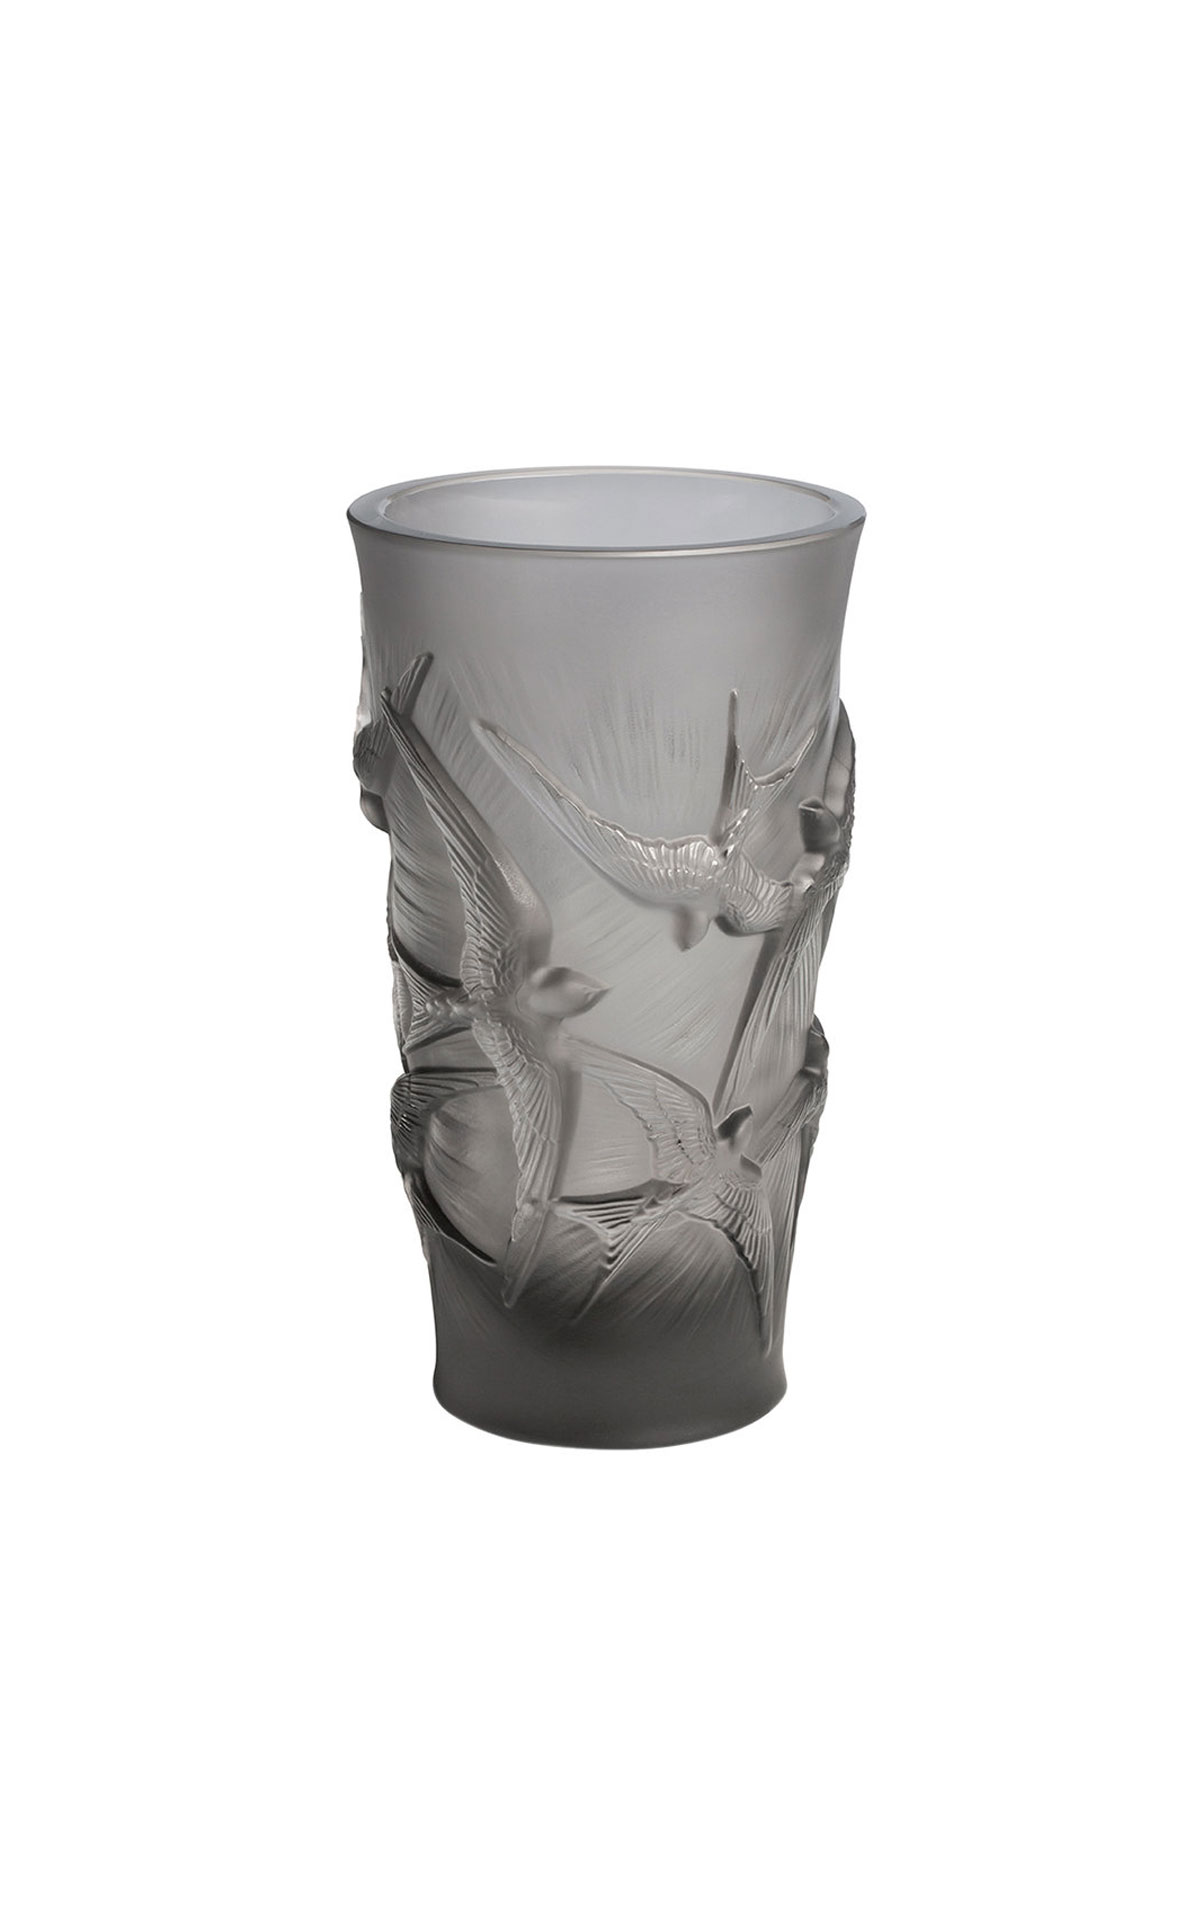 Lalique Vase hirondelles pm grey from Bicester Village